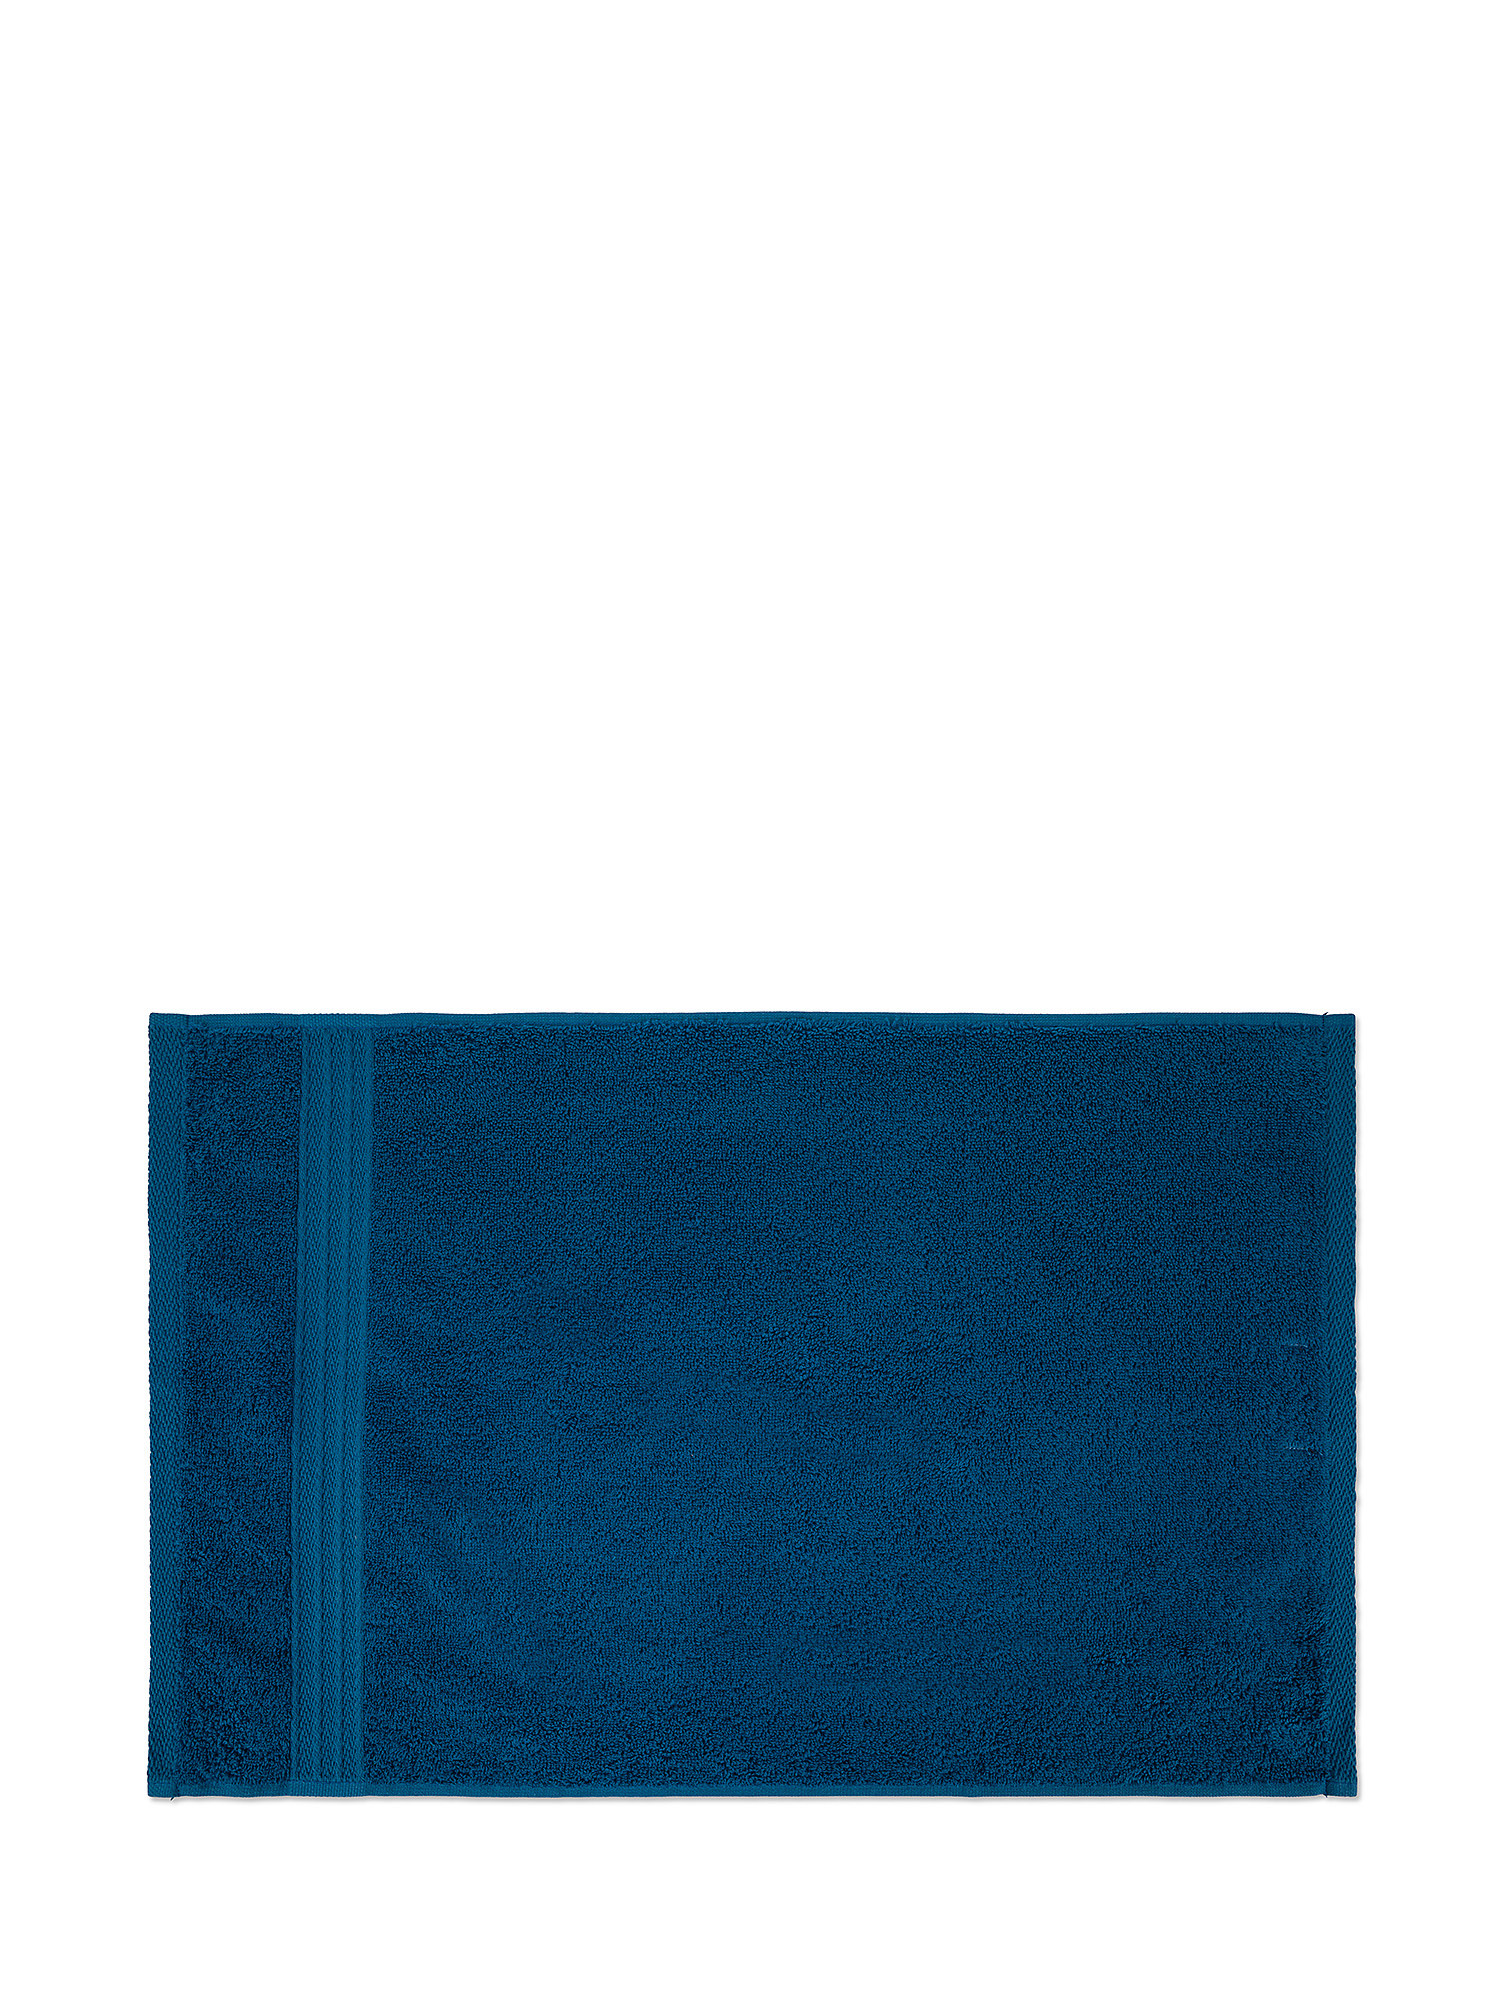 Zefiro solid color 100% cotton towel, Blue, large image number 1